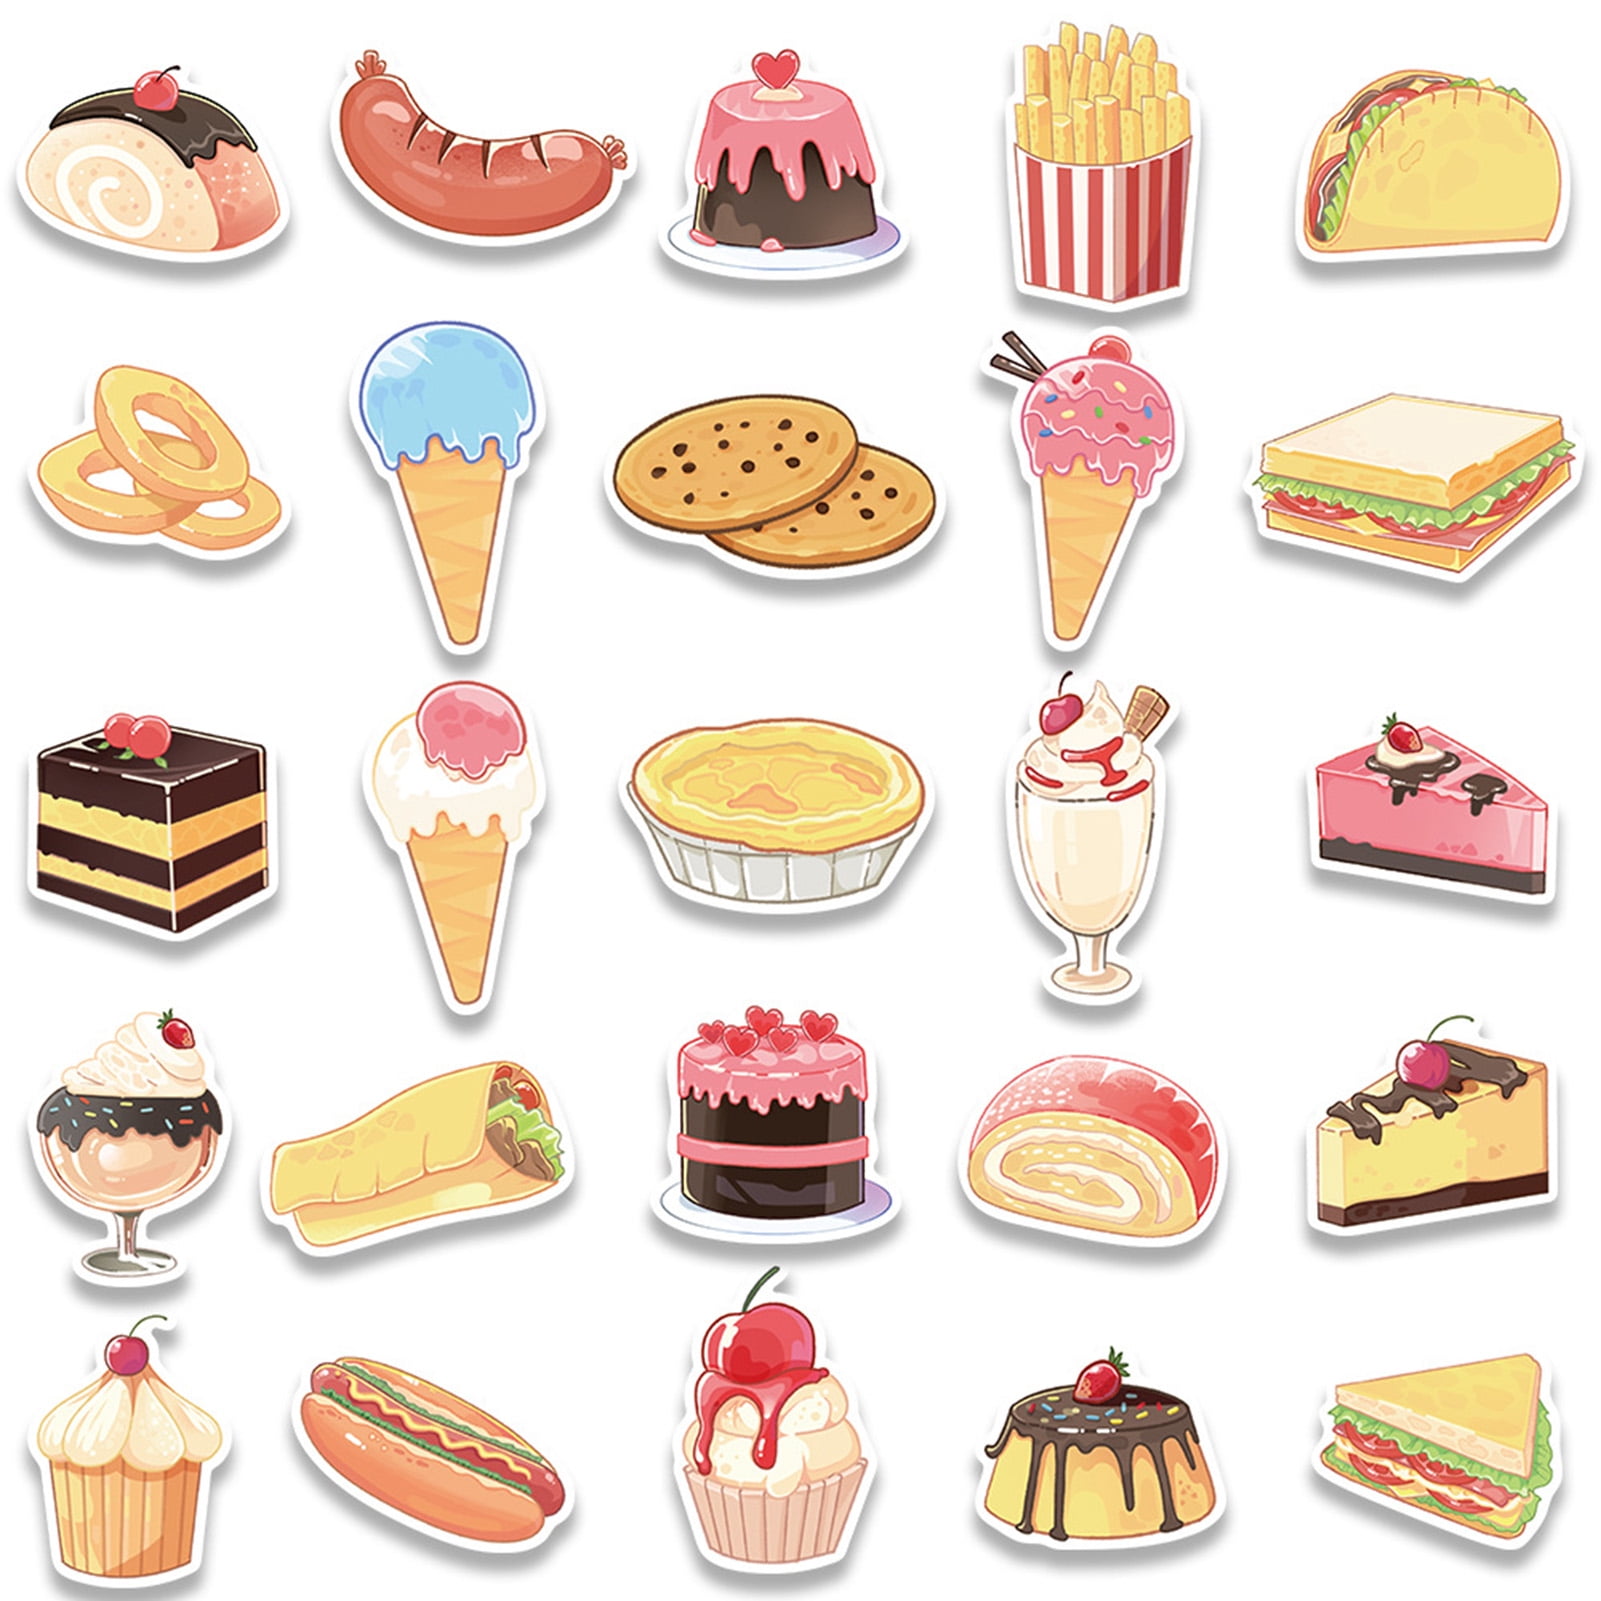 50pcs Cute Food Stickers - Ice Cream, Sandwiches, Desserts, Hot